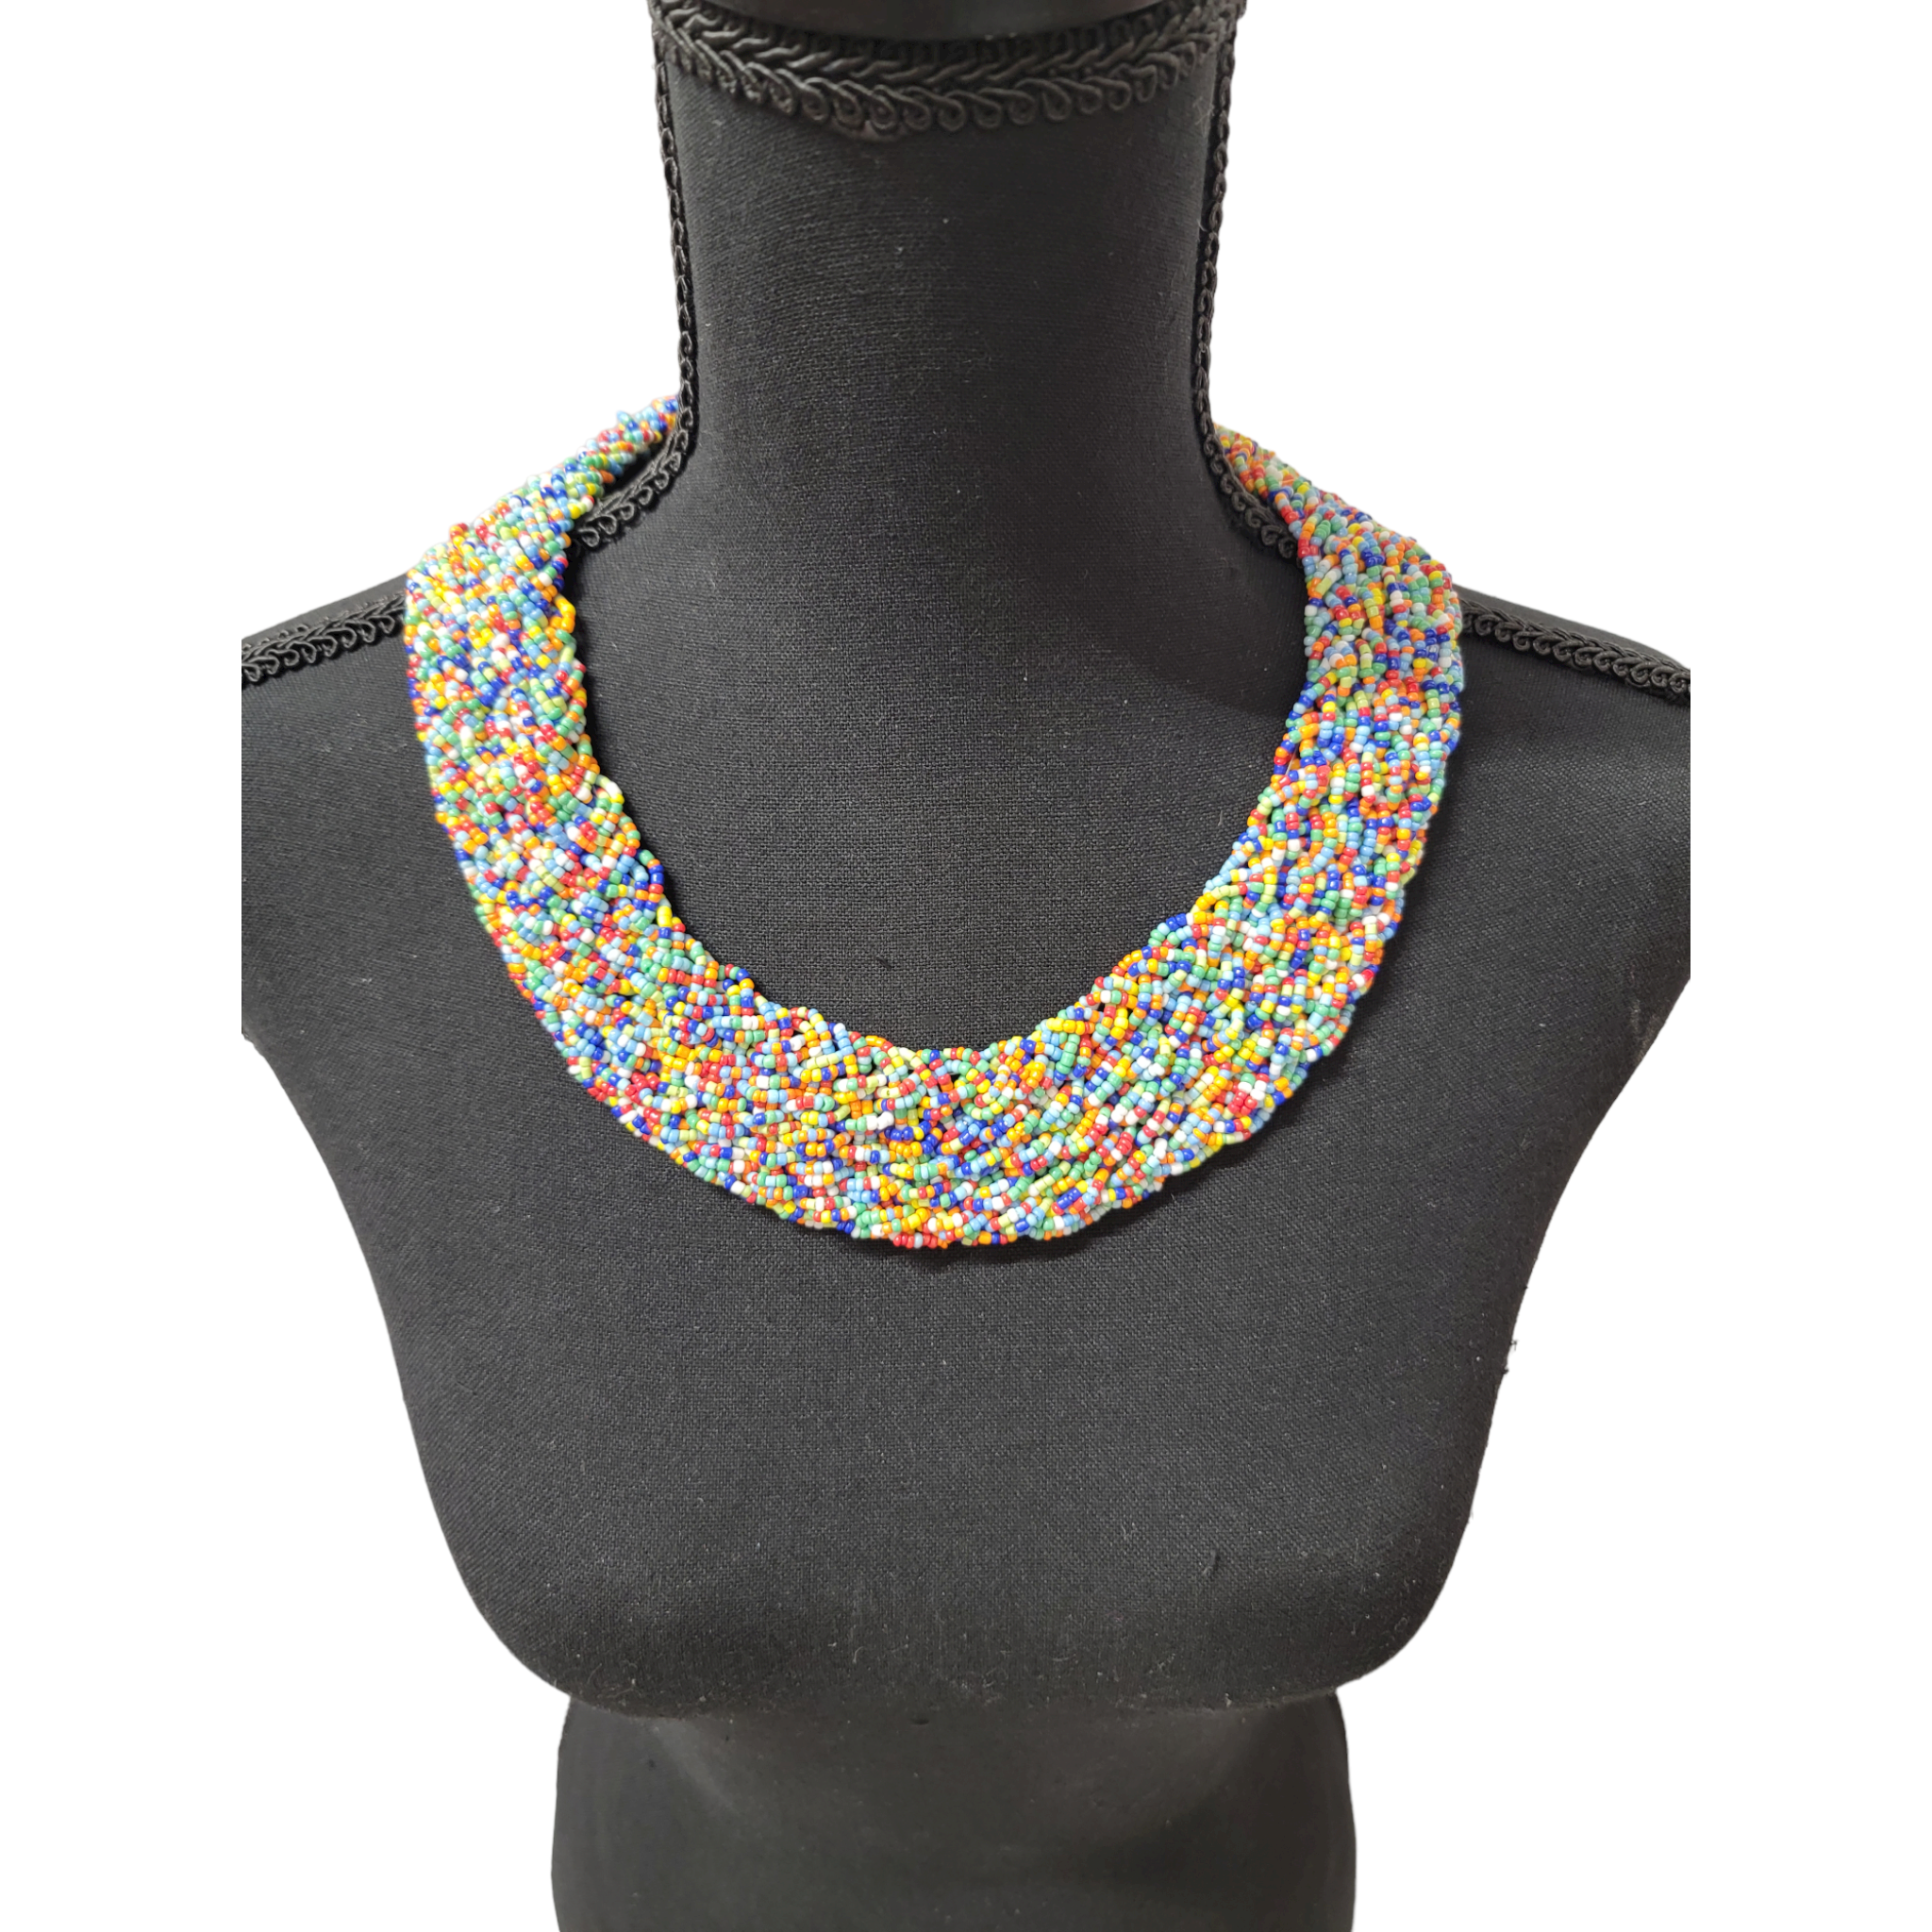 Super Fine Necklace - Disco Beads reflective jewellery